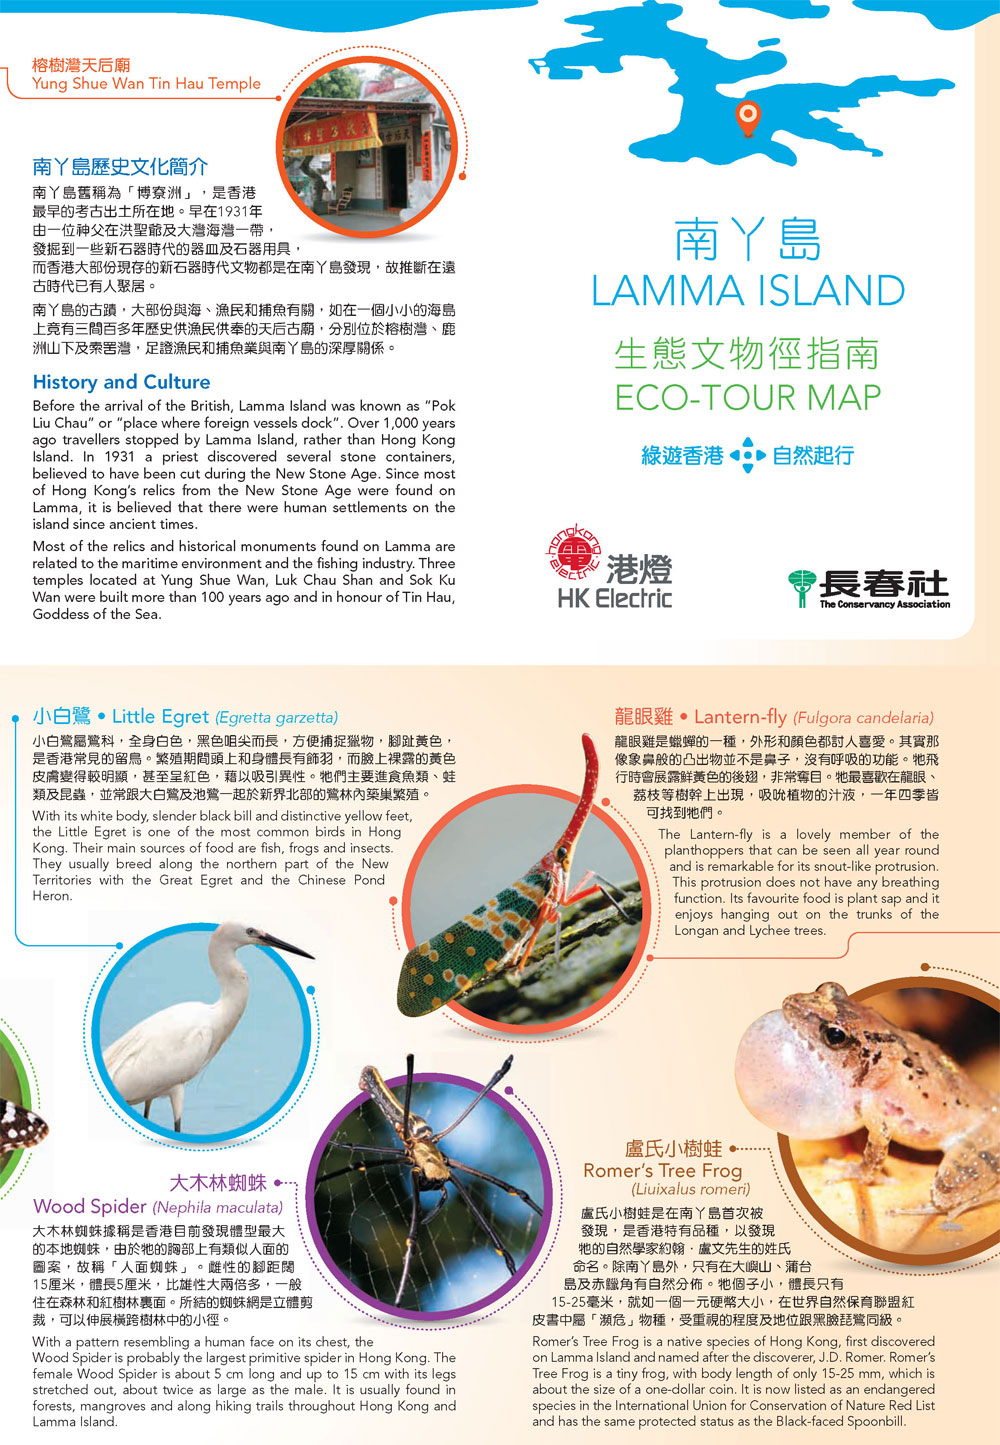 GHKG_lamma_island_ecotour_map_Page_1a.jpg